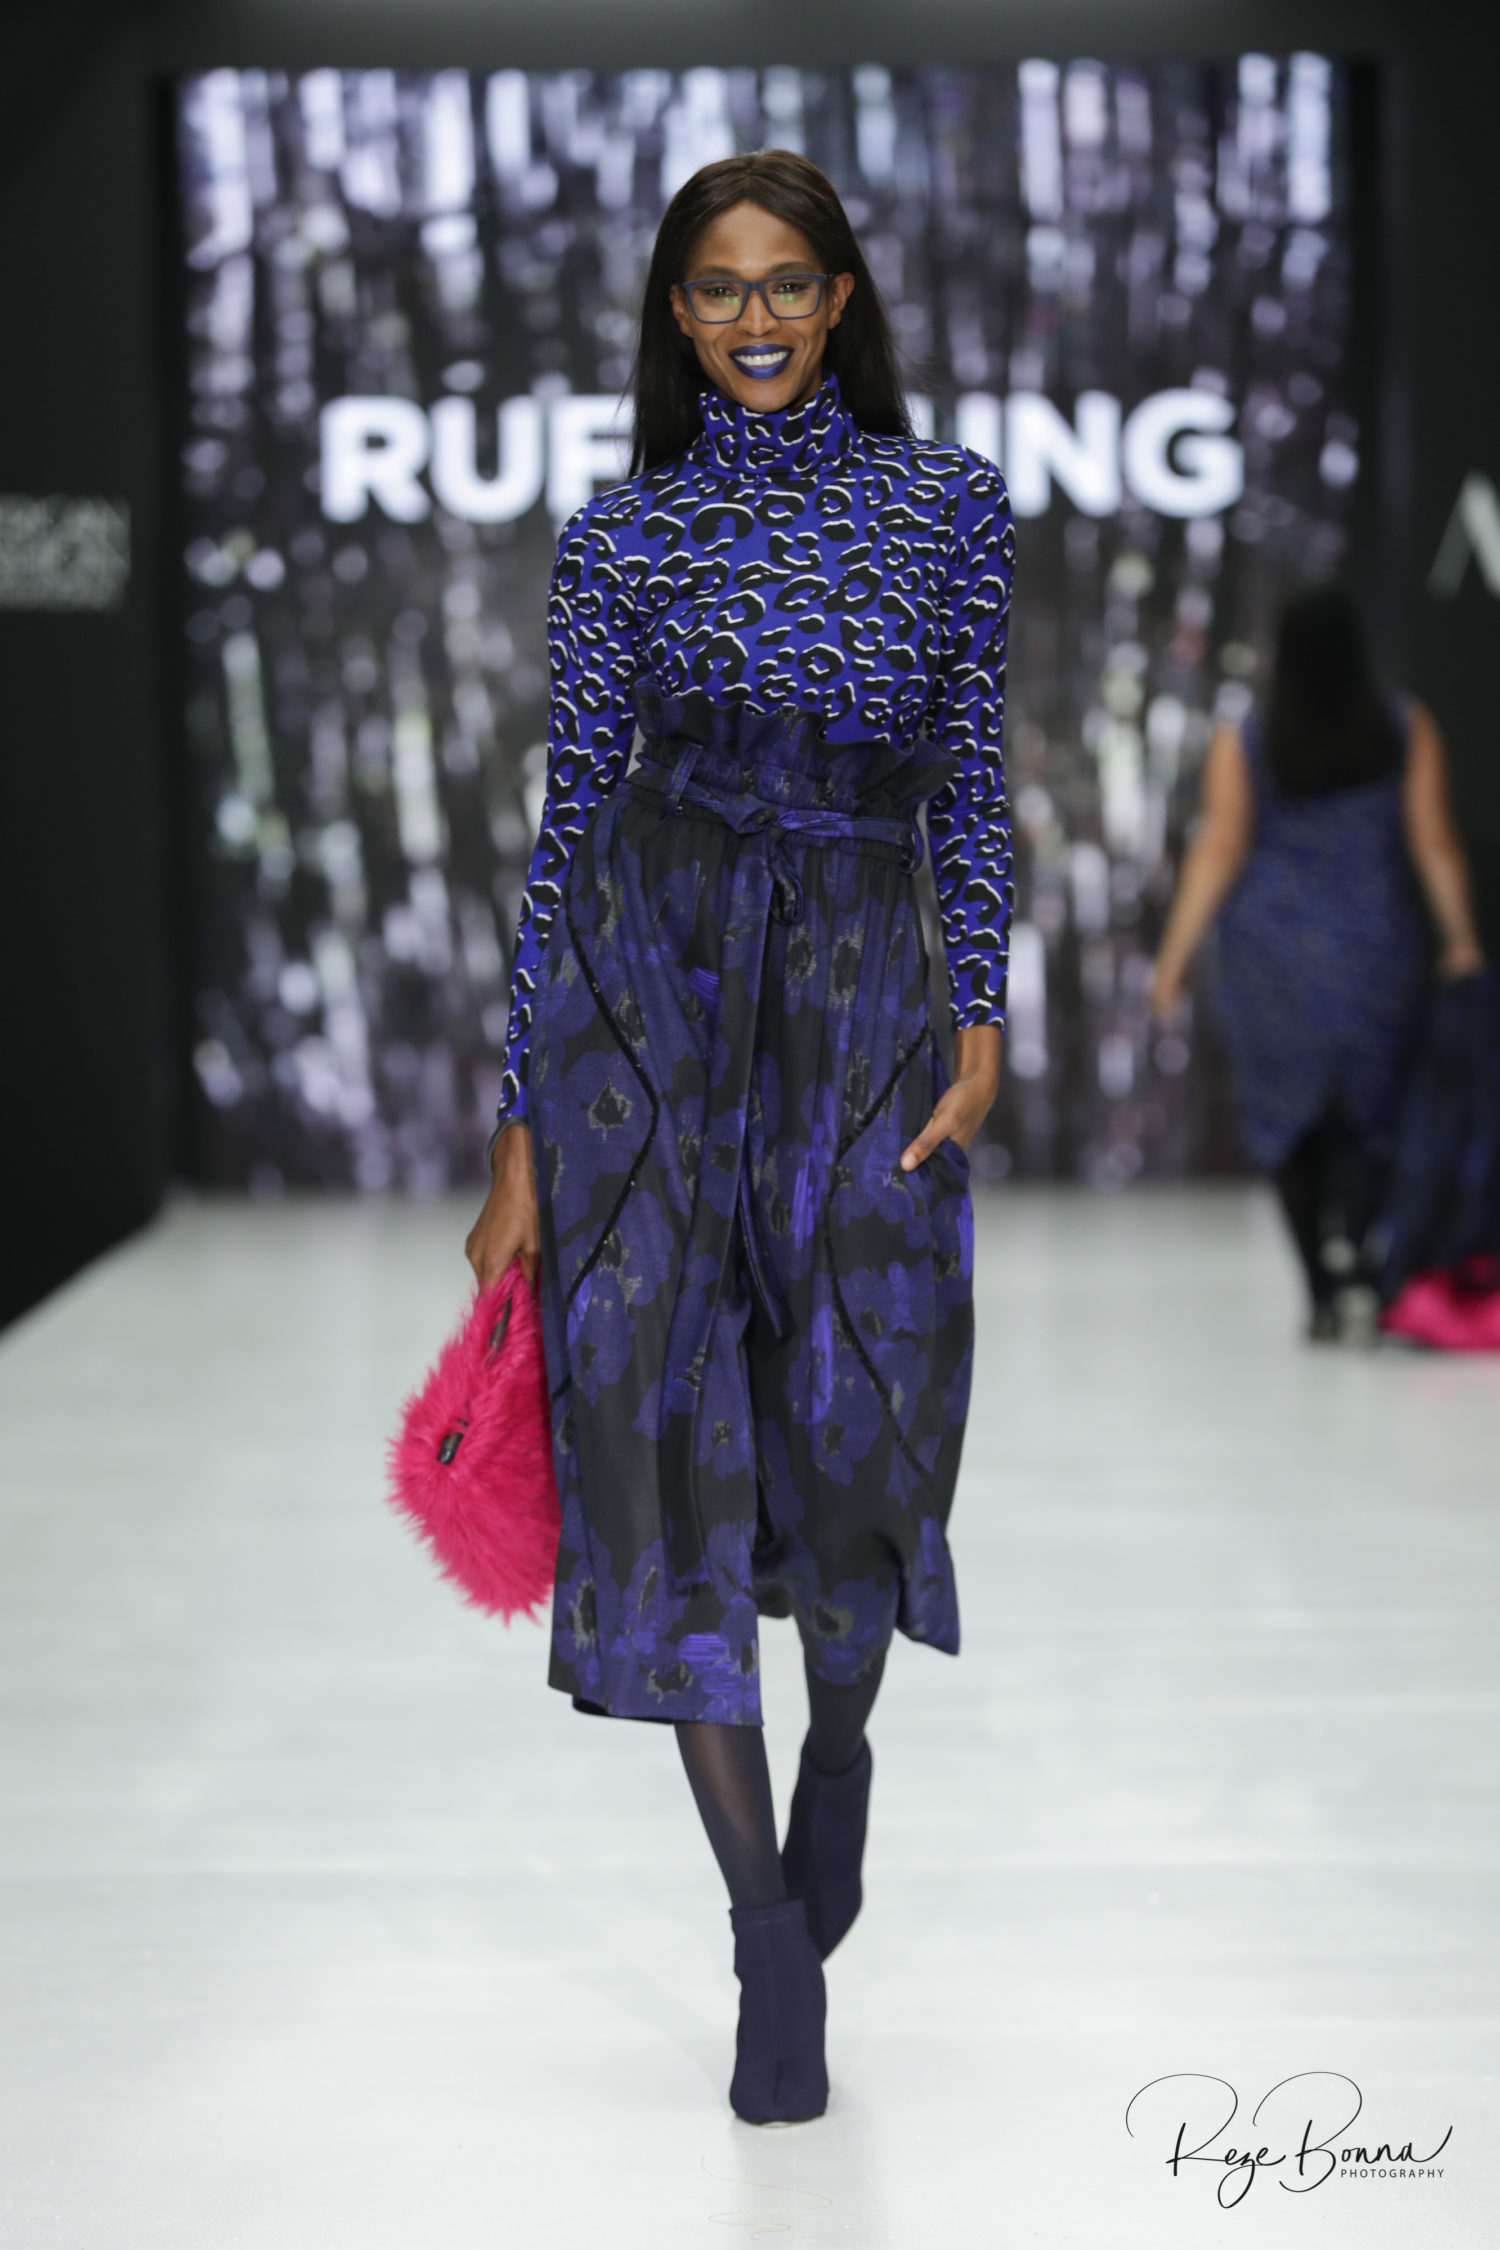 #AFICTFW19 | AFI Capetown Fashion Week Ruff Tung